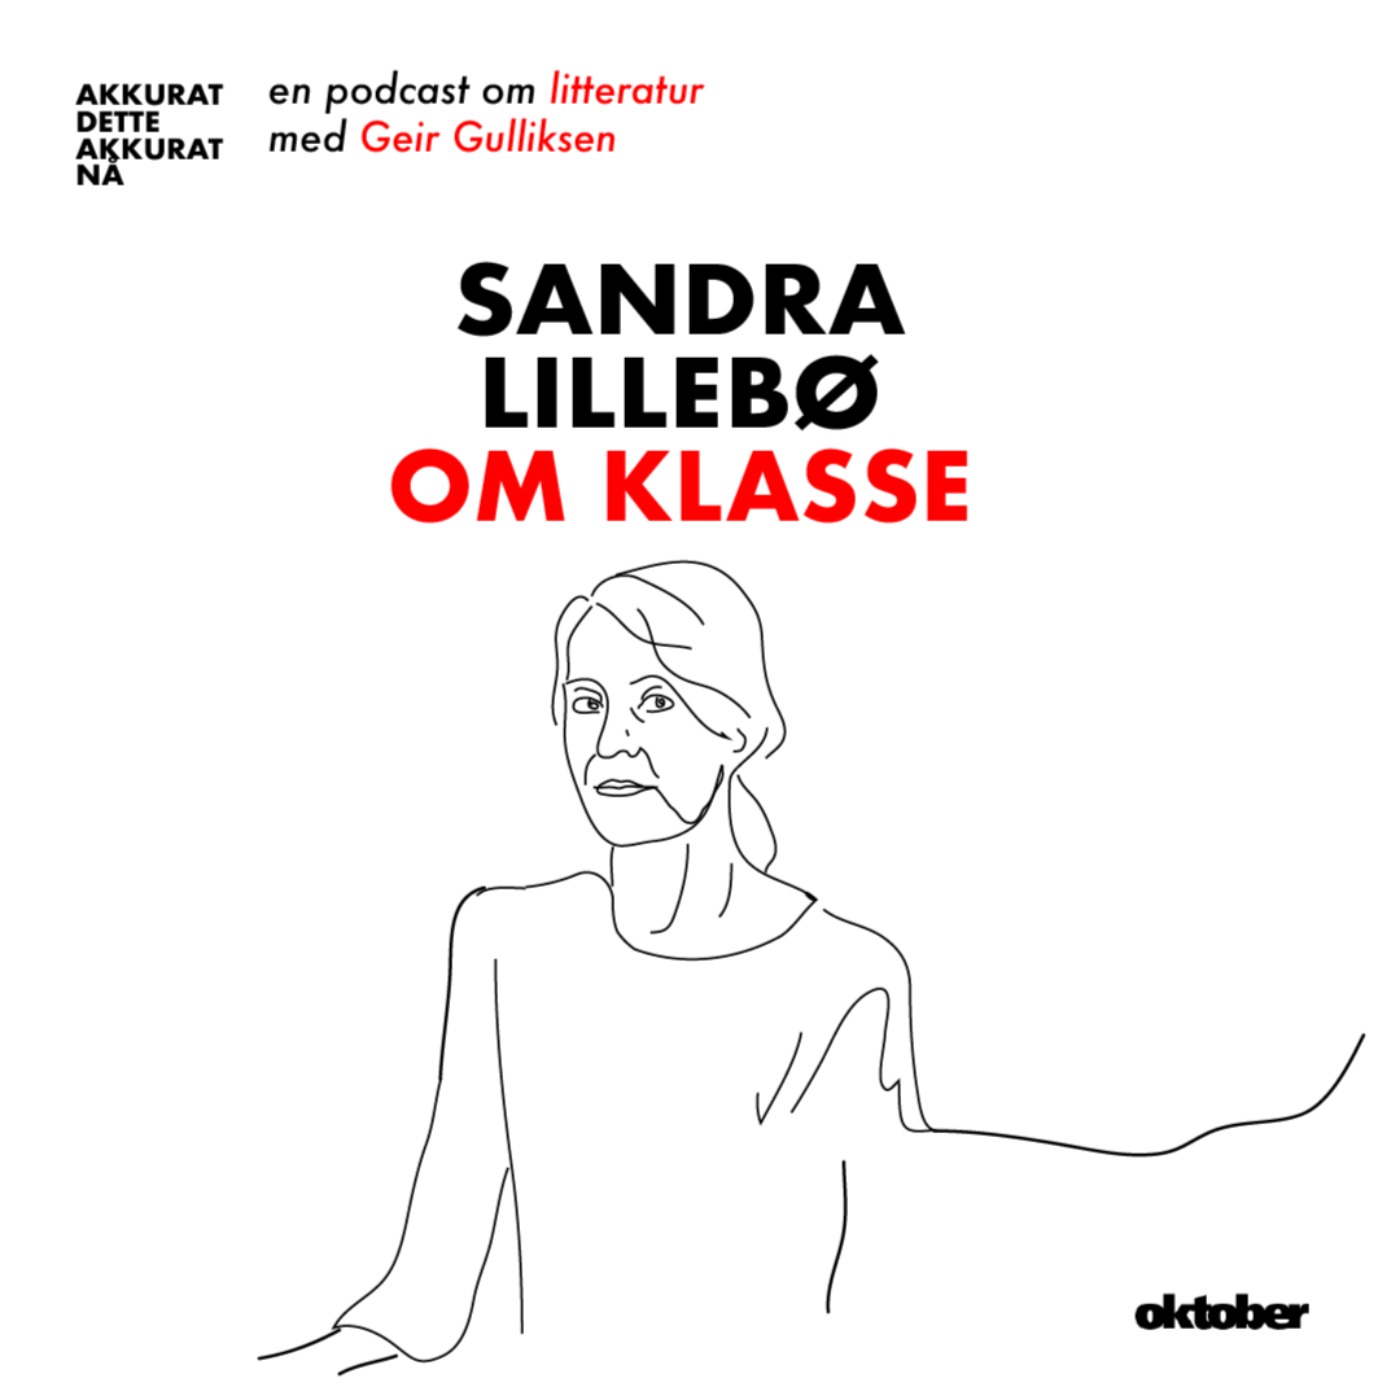 Sandra Lillebø om klasse